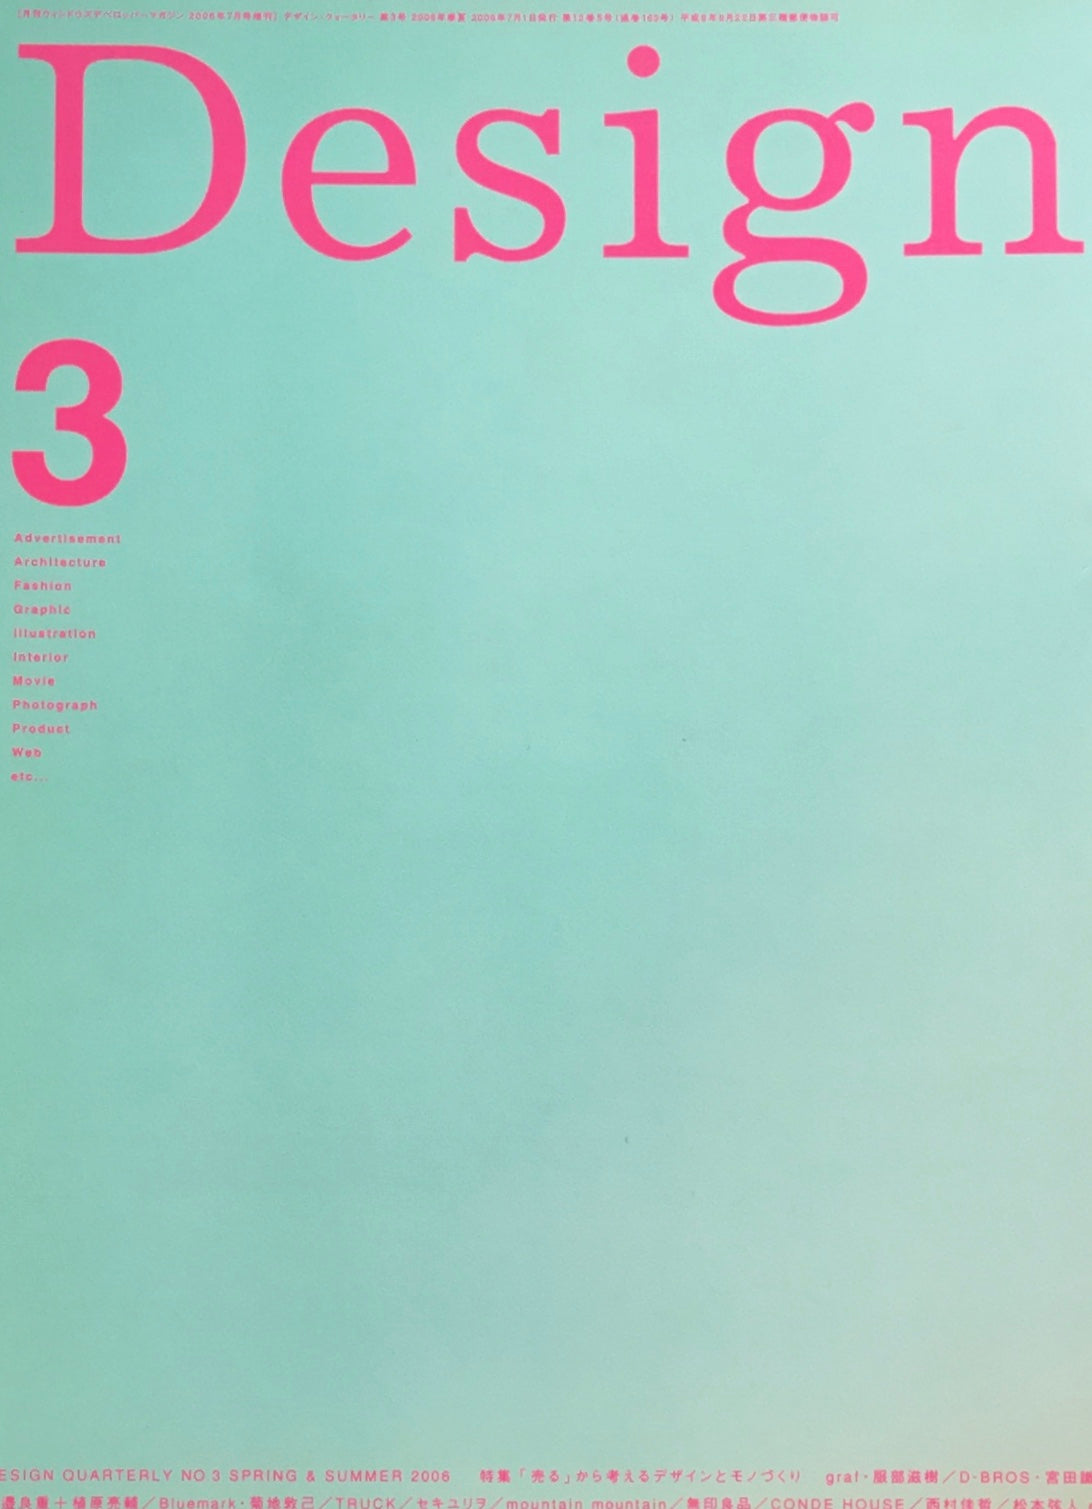 DESIGN QUARTERLY　デザイン・クォータリー　5冊セット